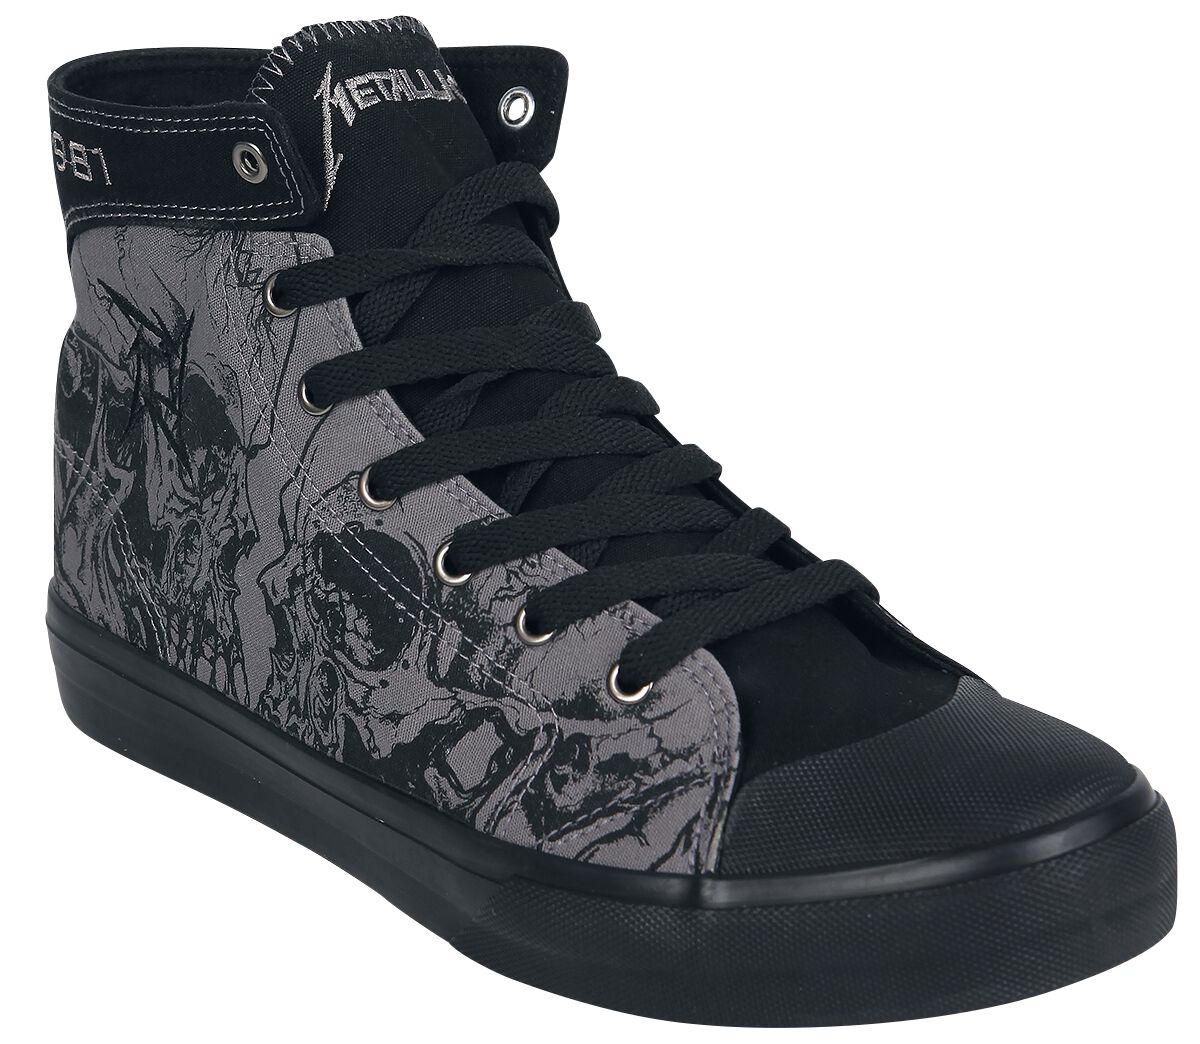 Metallica Sneaker high - EMP Signature Collection - EU37 bis EU47 - Größe EU46 - grau/schwarz  - EMP exklusives Merchandise!